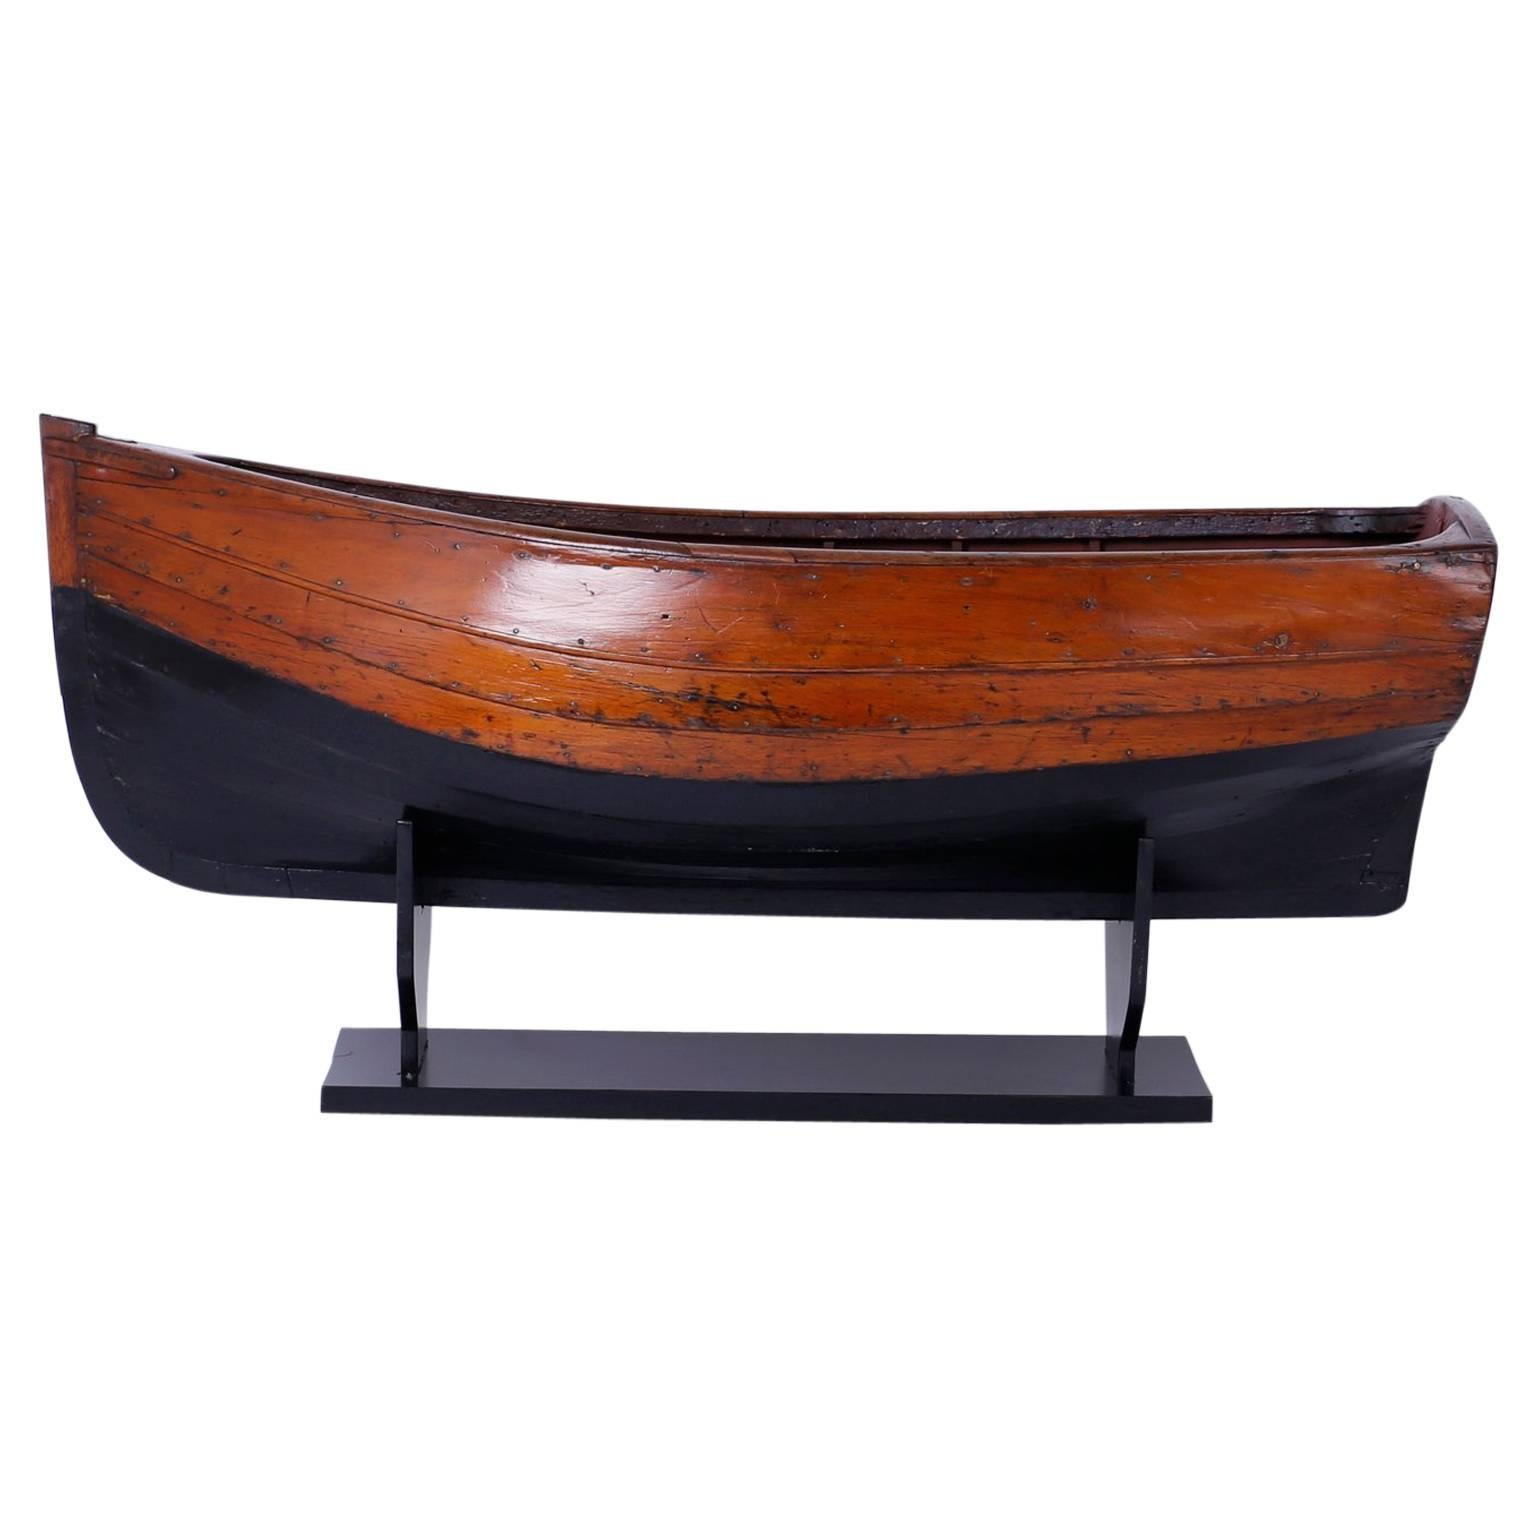 Large Mahogany Antique Boat Model